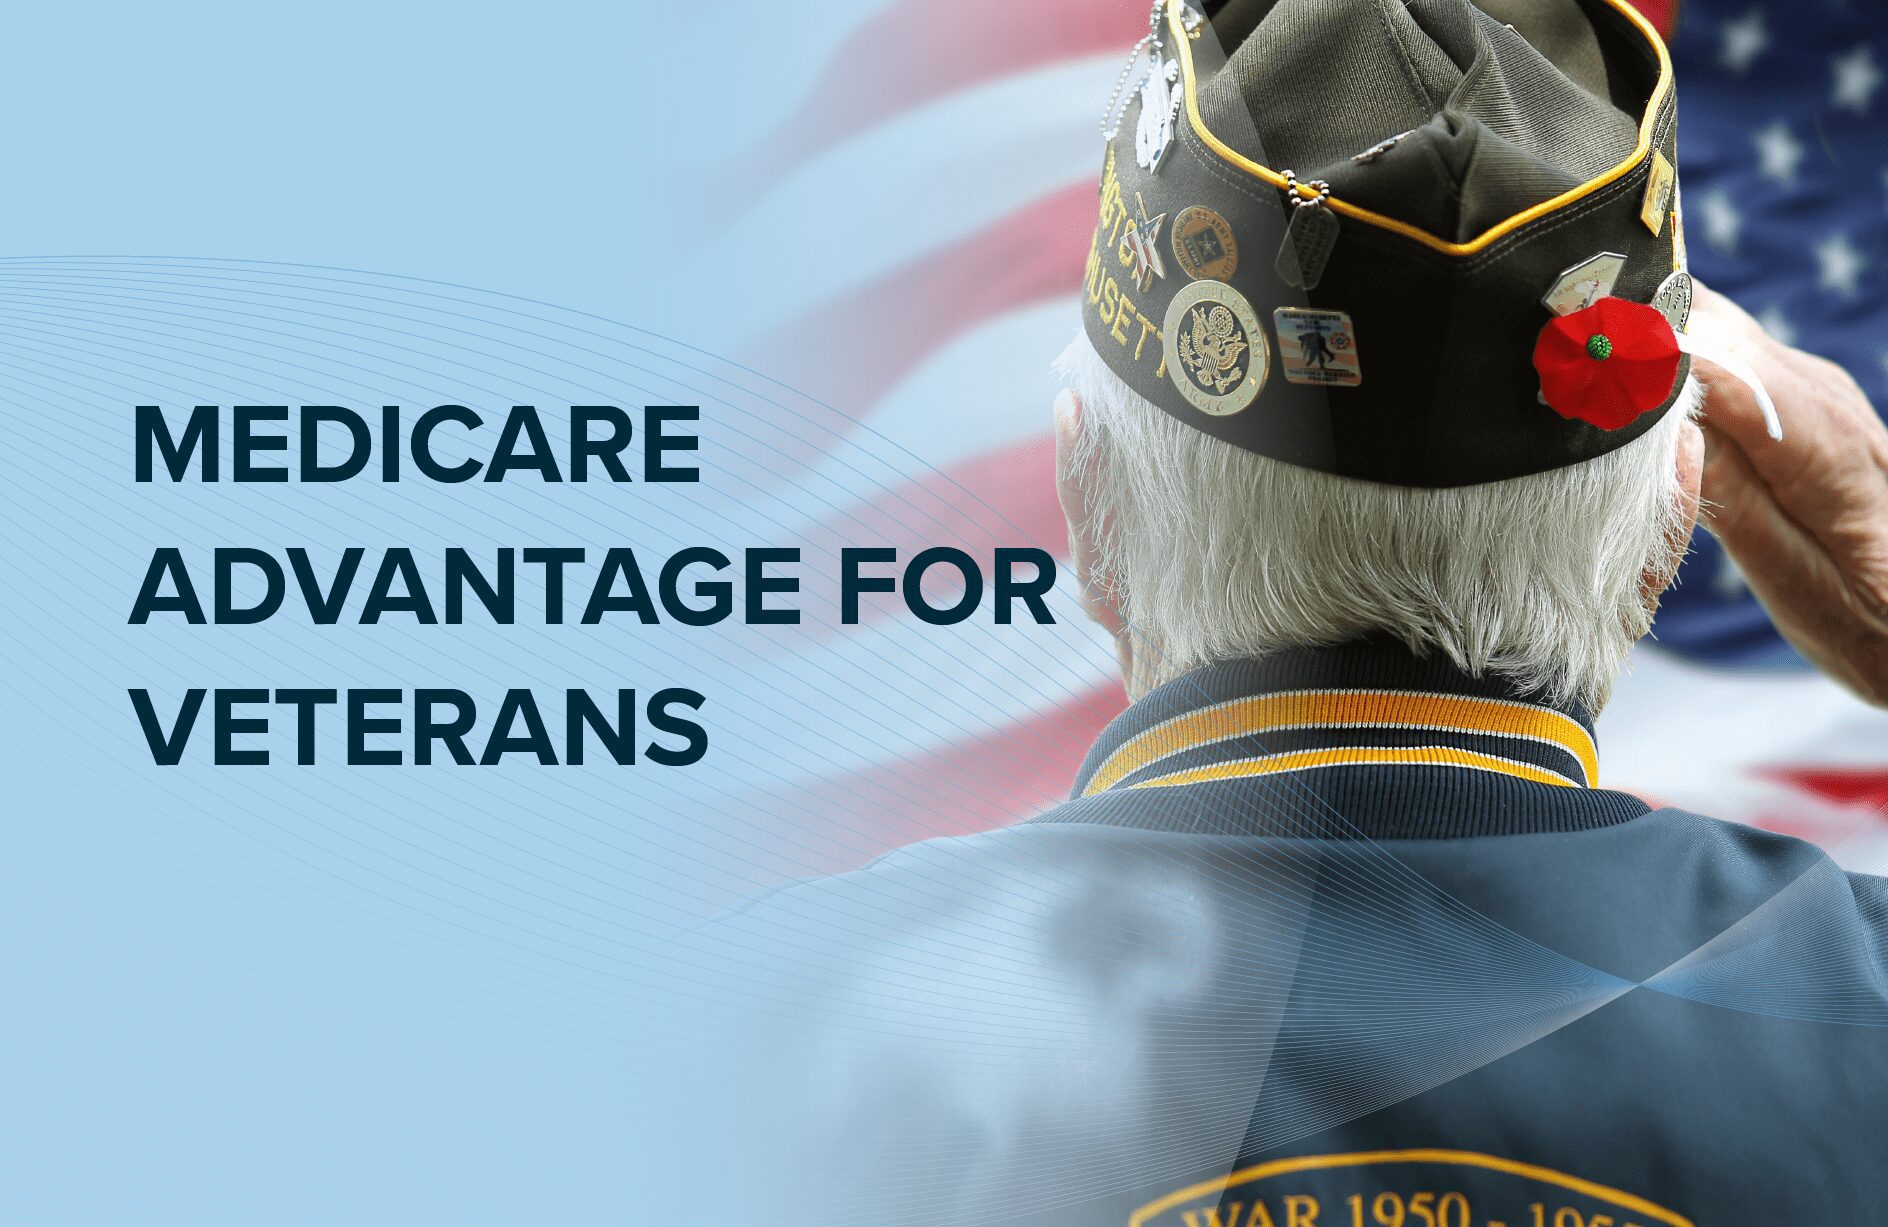 Medicare Advantage for Veterans